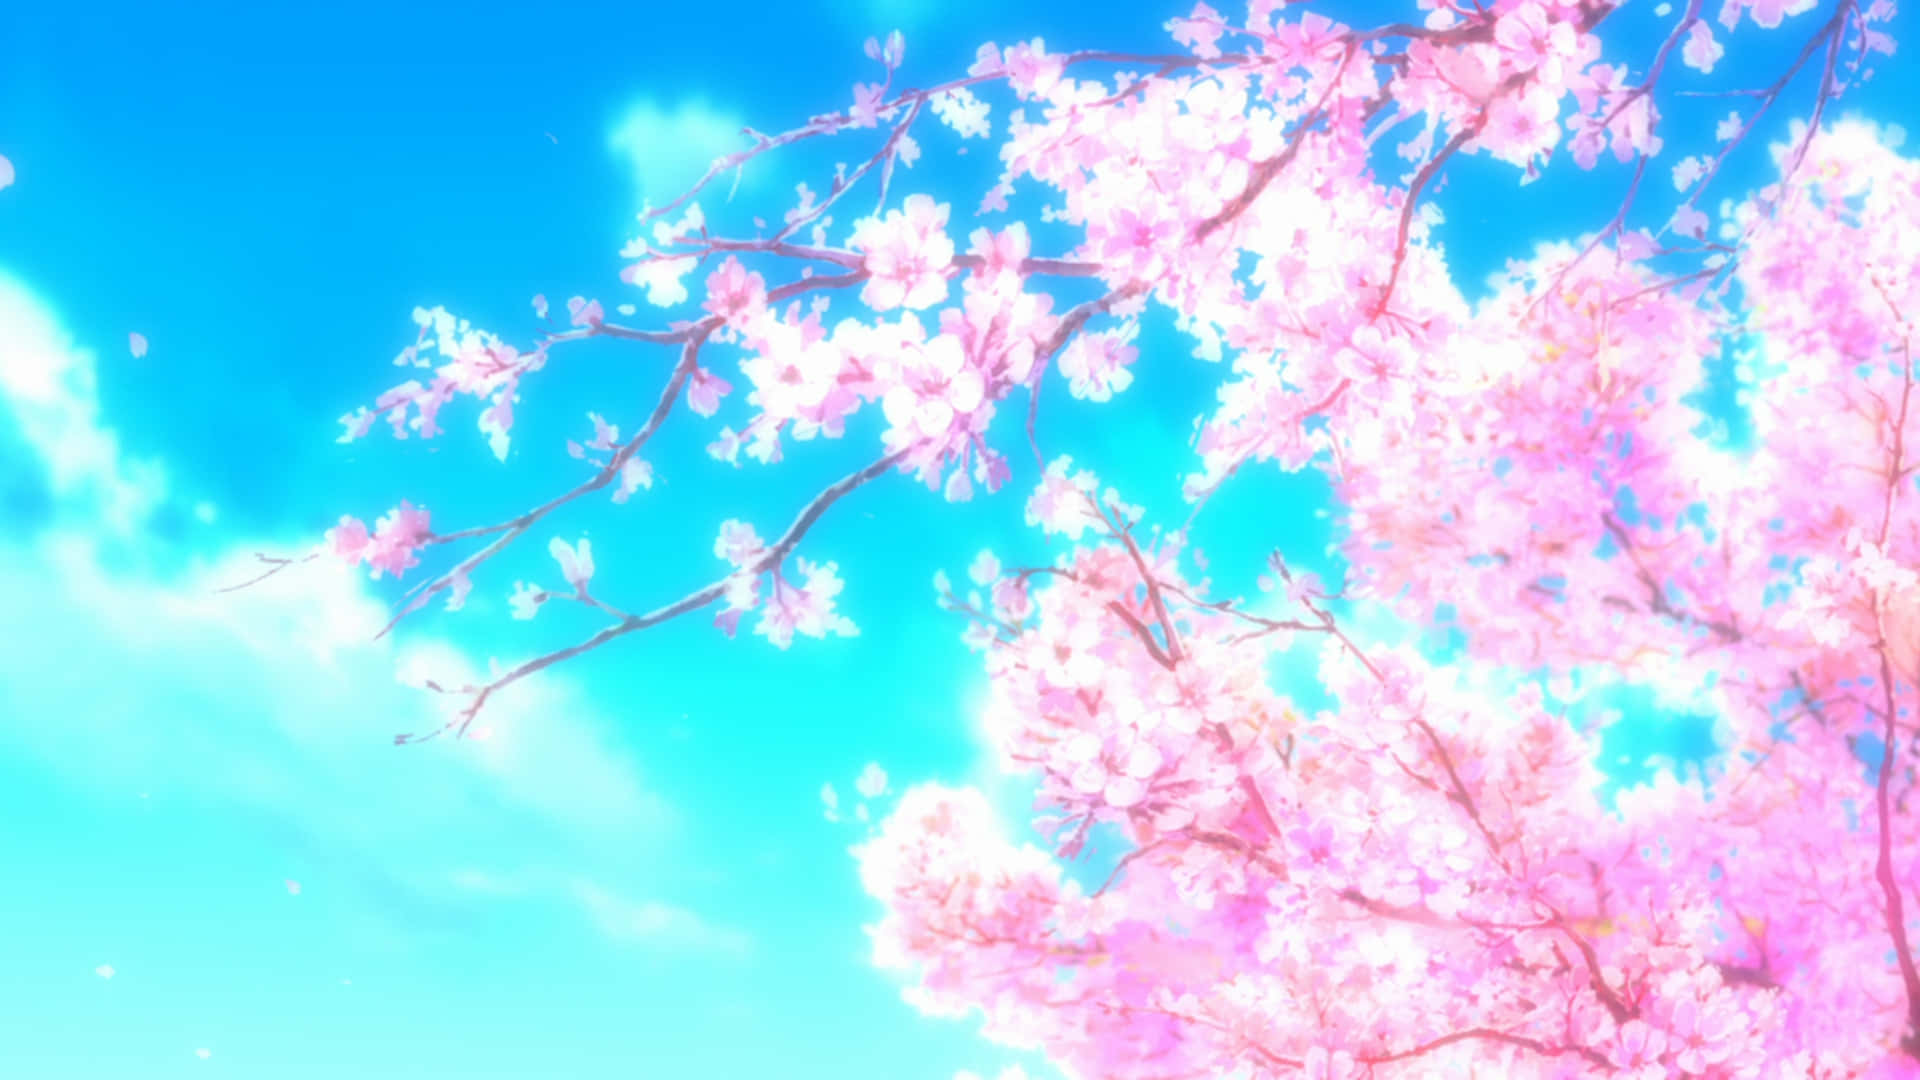 Romantischeanime-landschaft Mit Kirschblüten Wallpaper